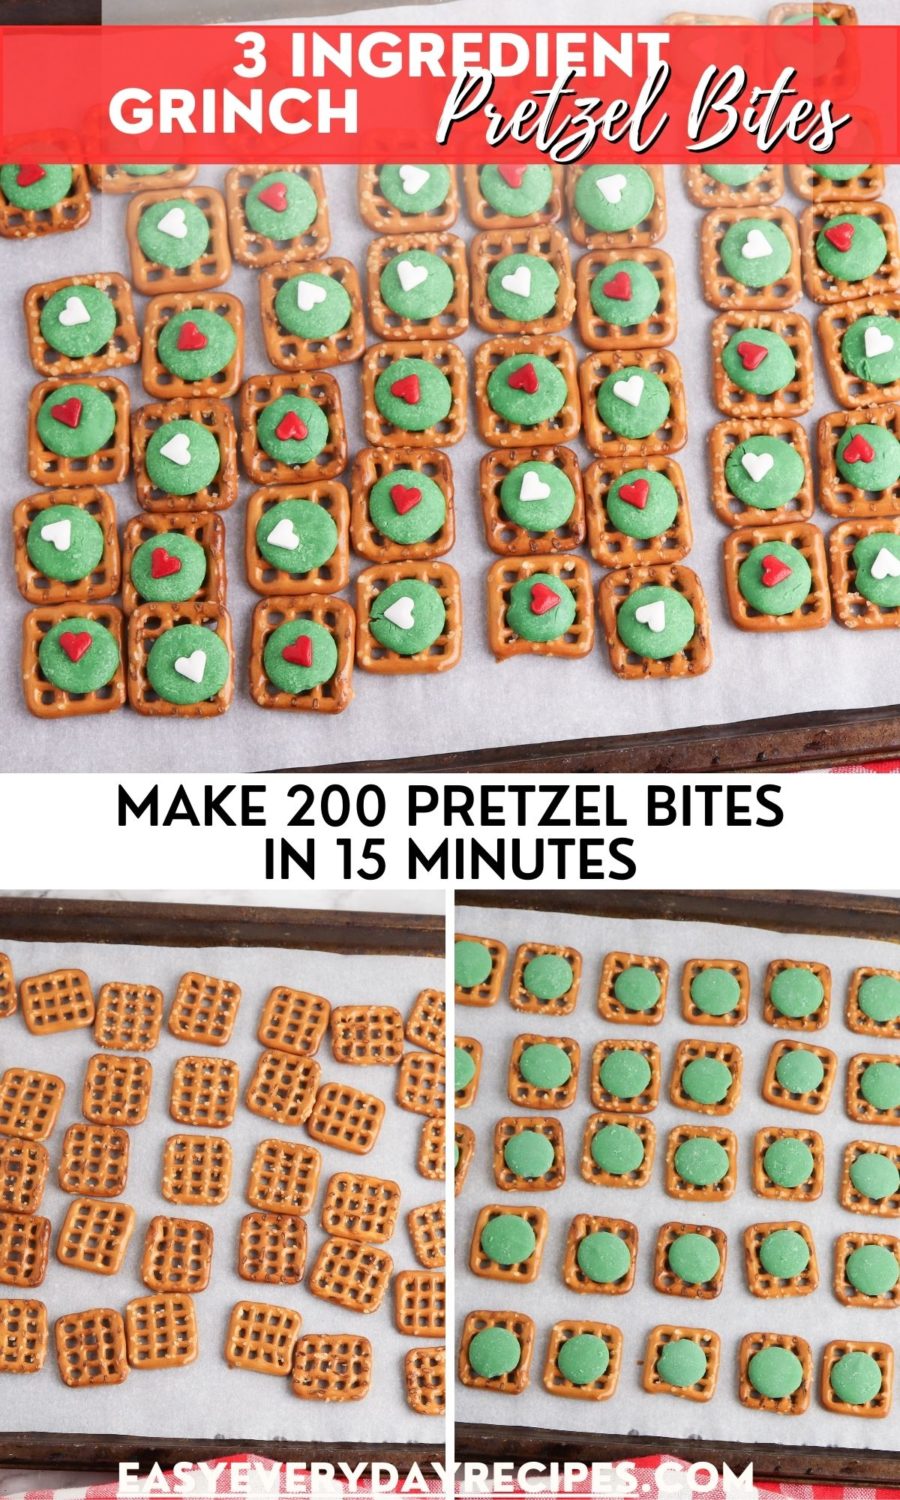 3 ingredient pretzel bites make 200 pretzel bites in 15 minutes.